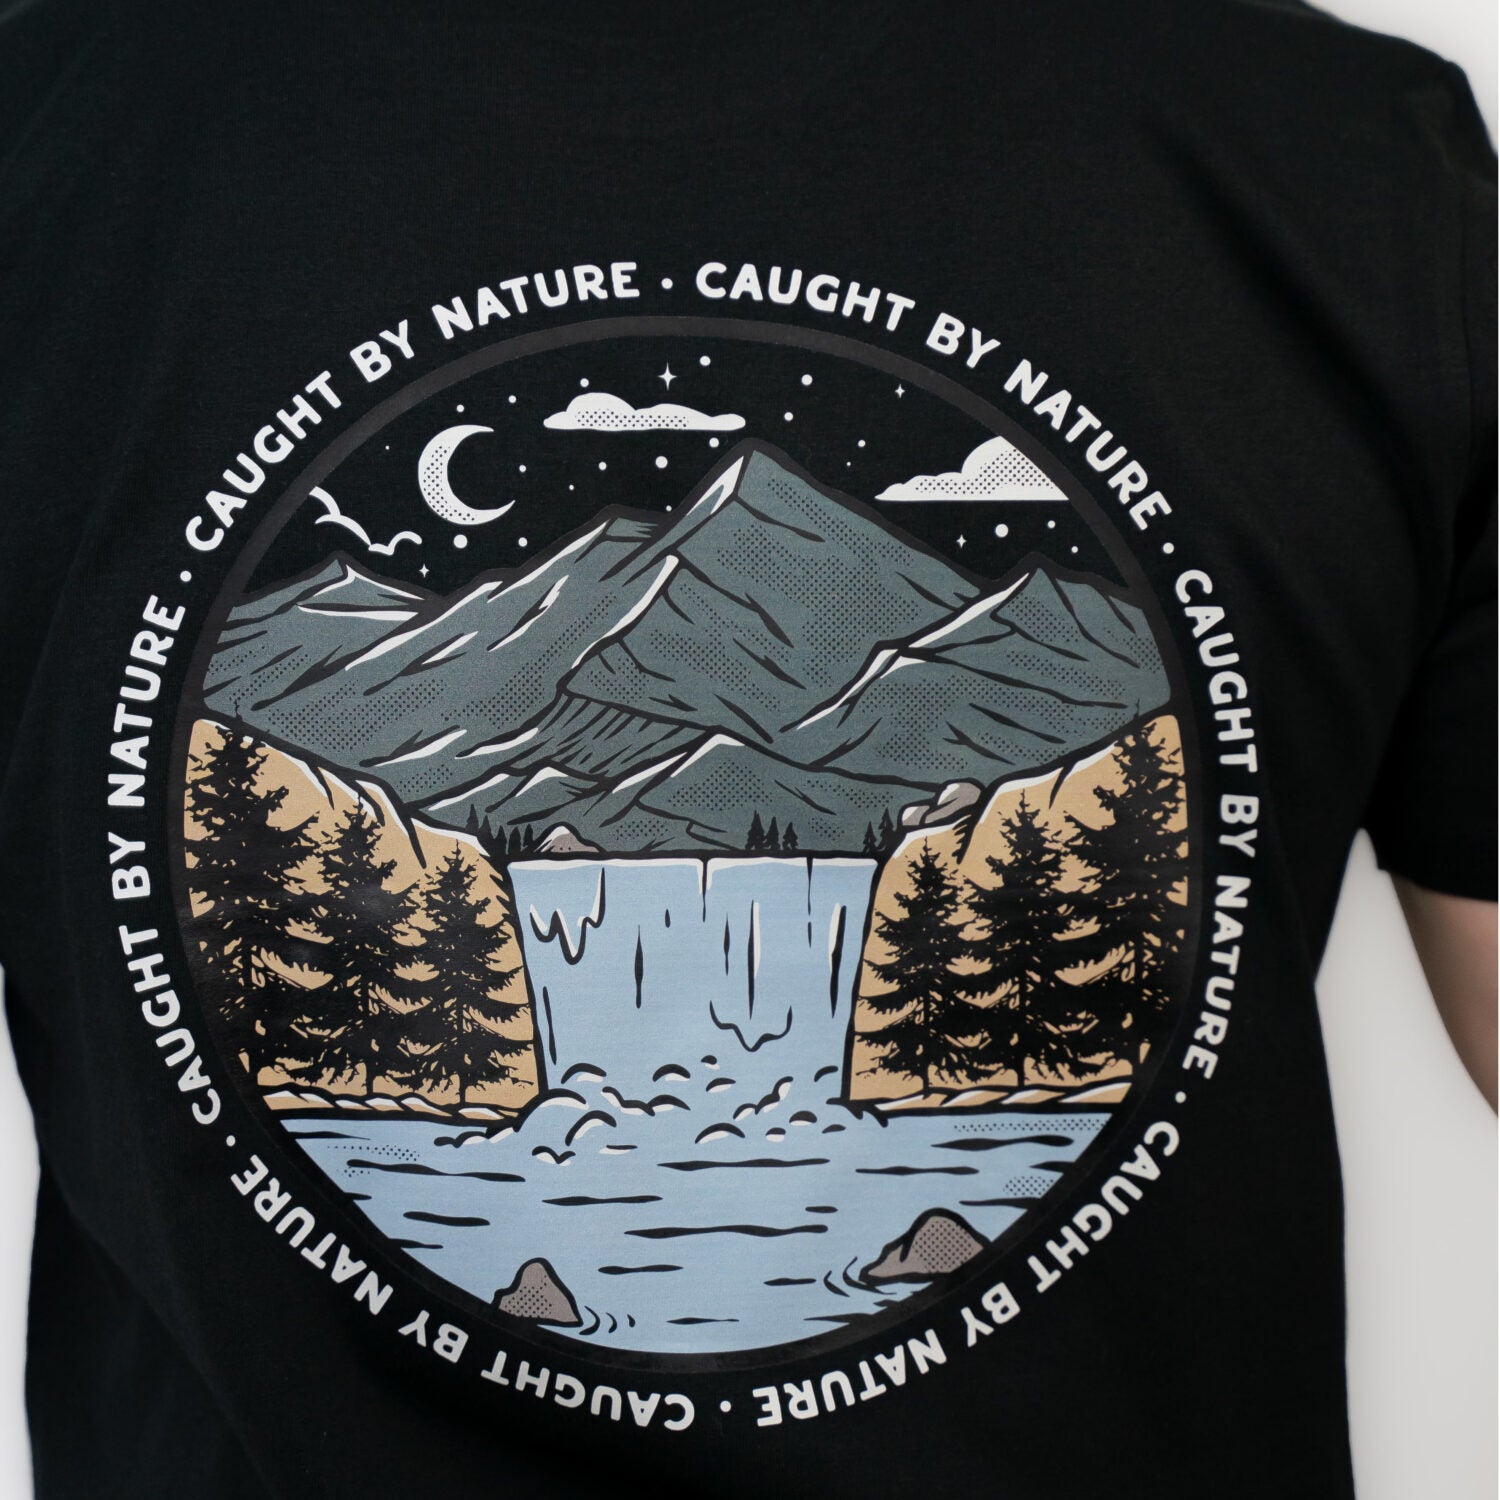 Restless Crew Unisex T-Shirt CAUGHT BY NATURE - Black_1.1